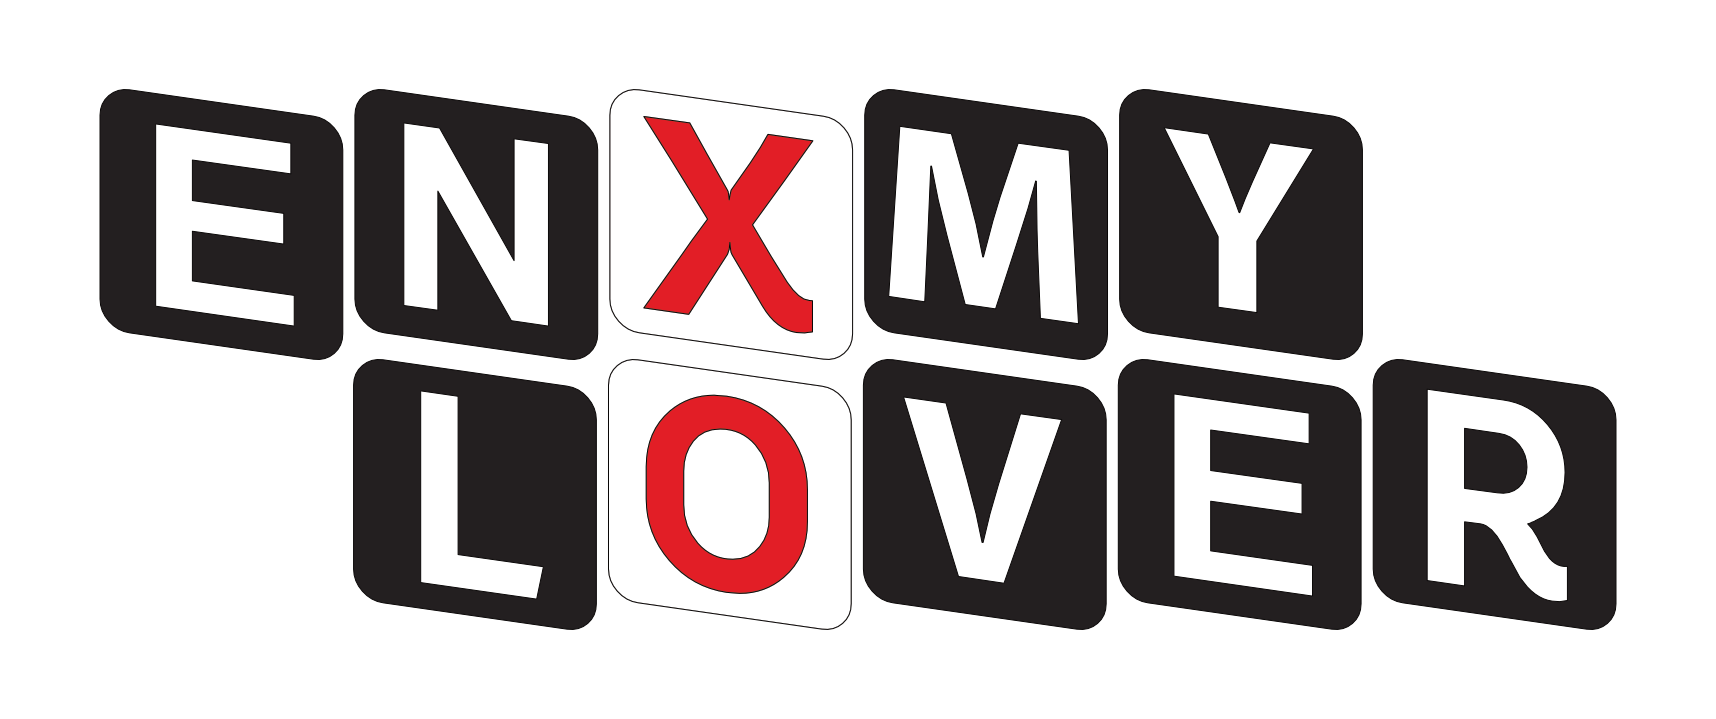 ENXMY vs. LOVER